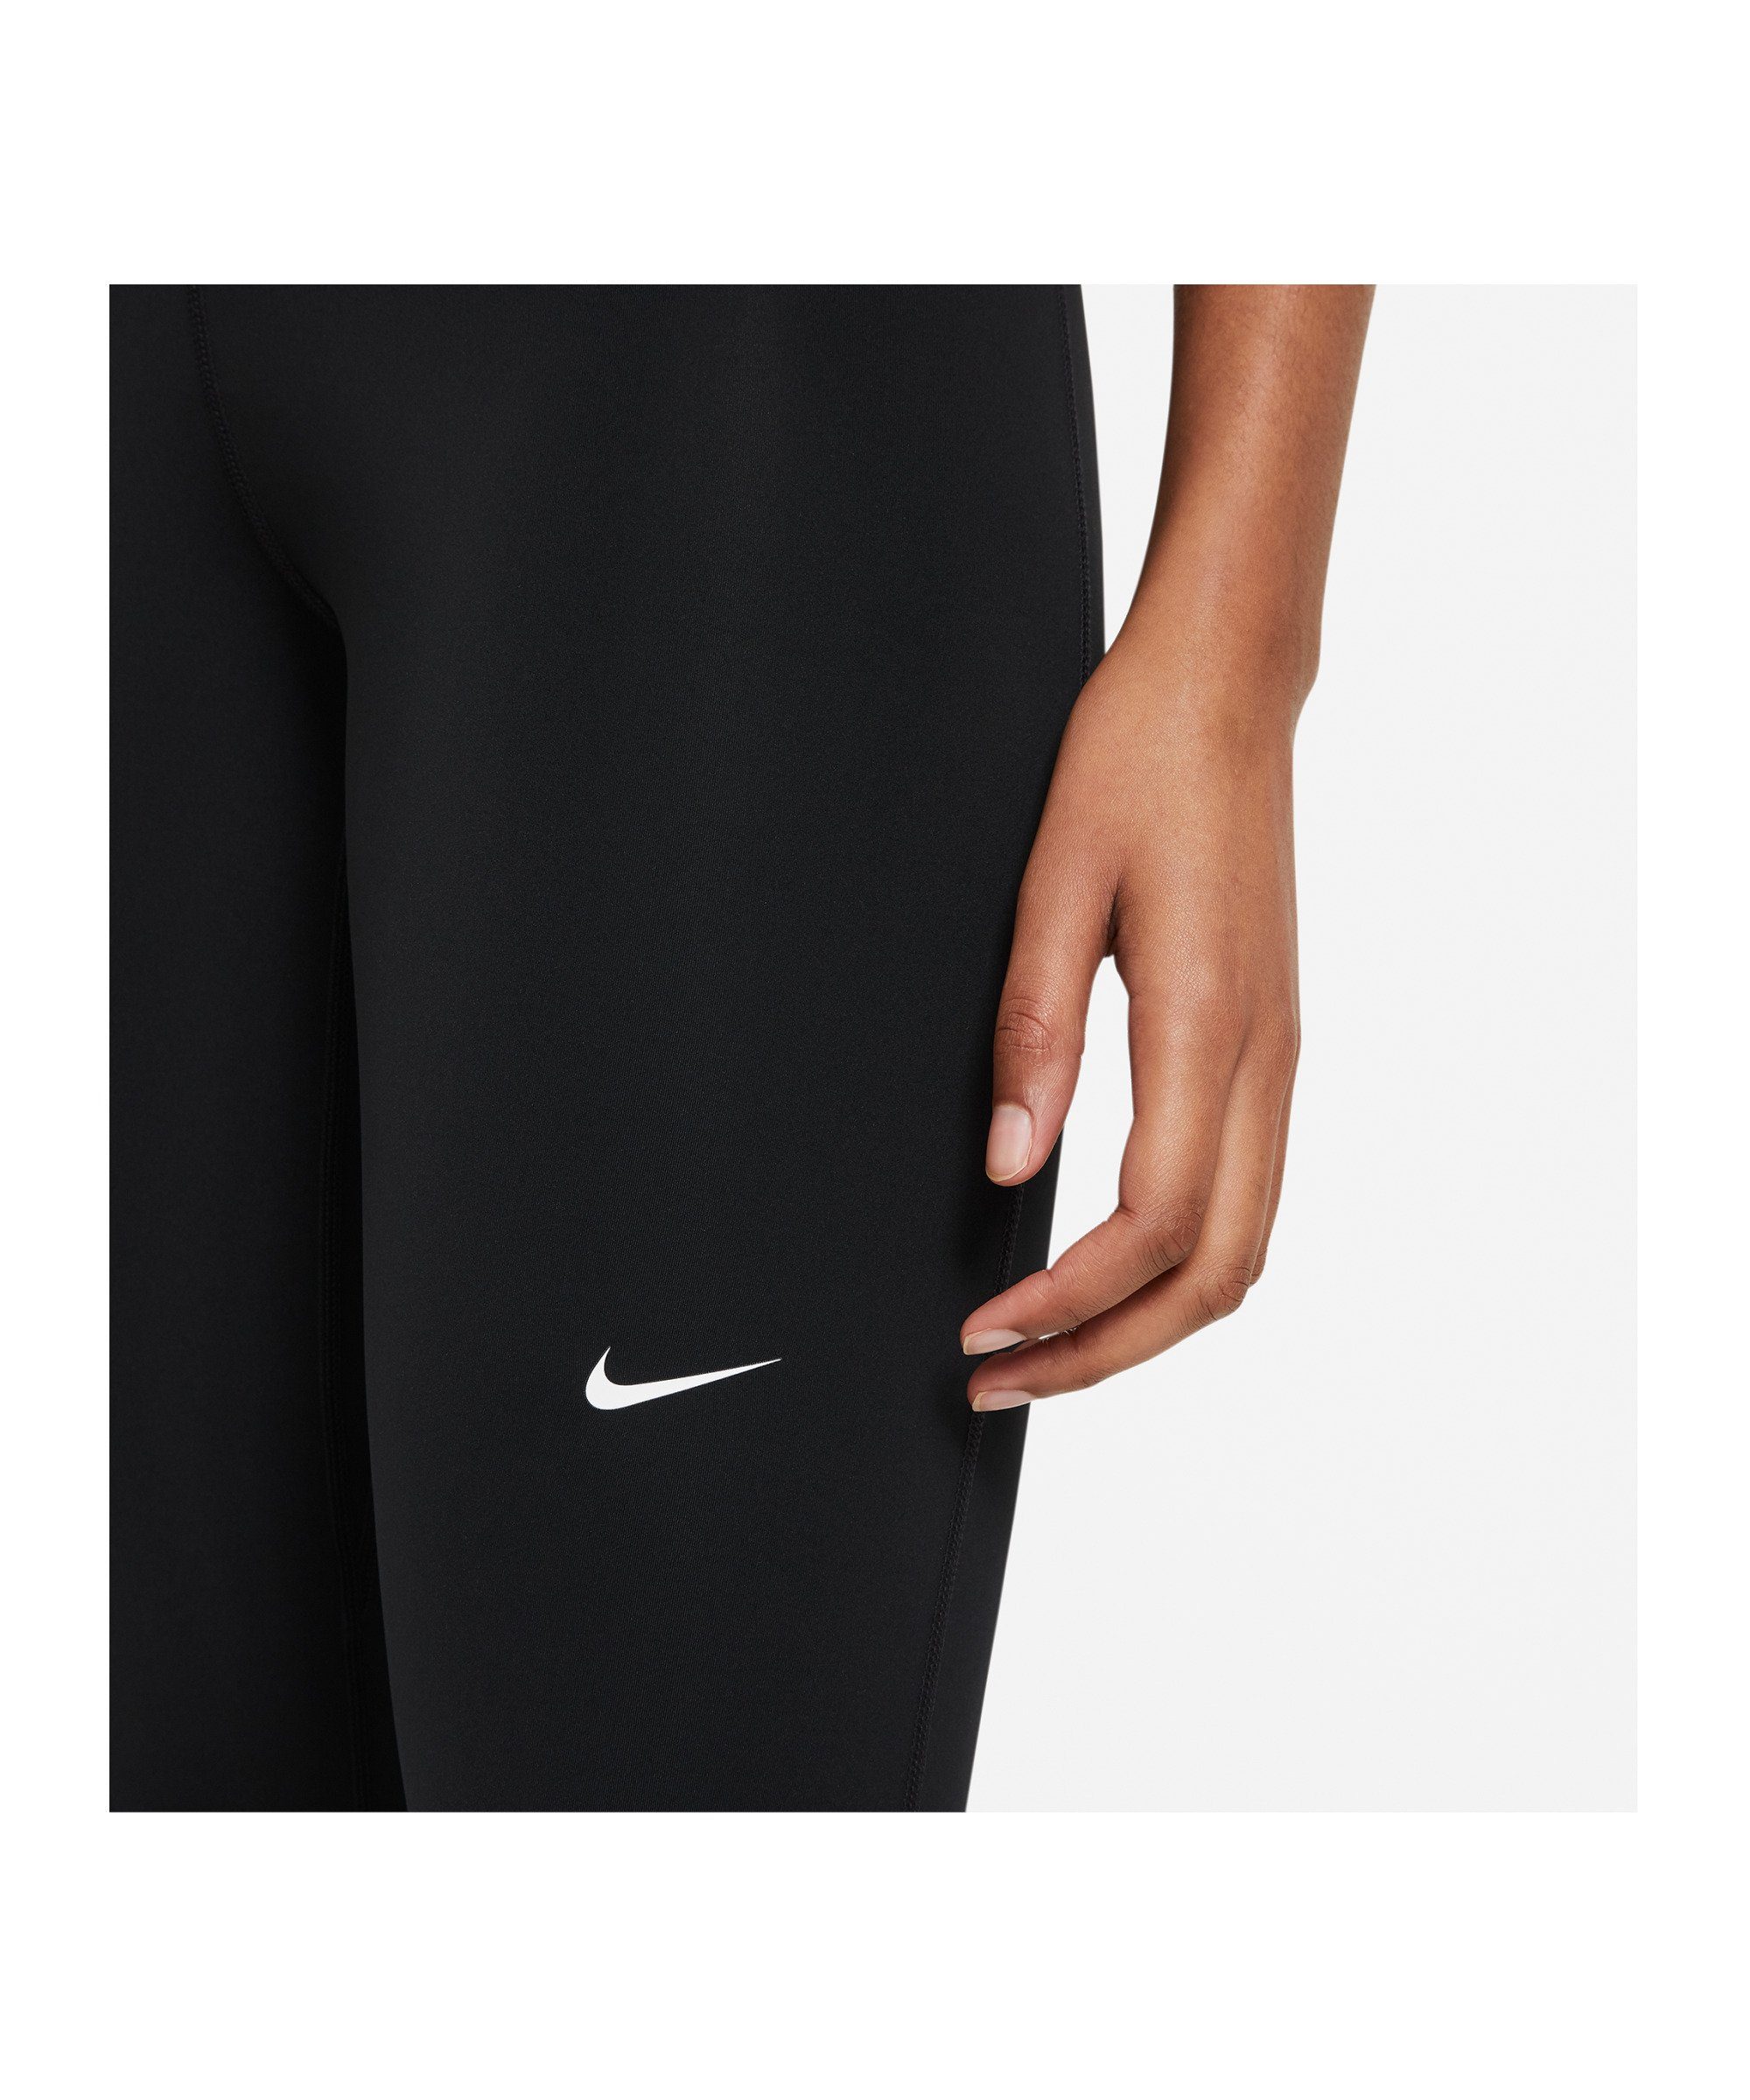 Nike Laufhose 365 Leggings schwarzweiss Damen